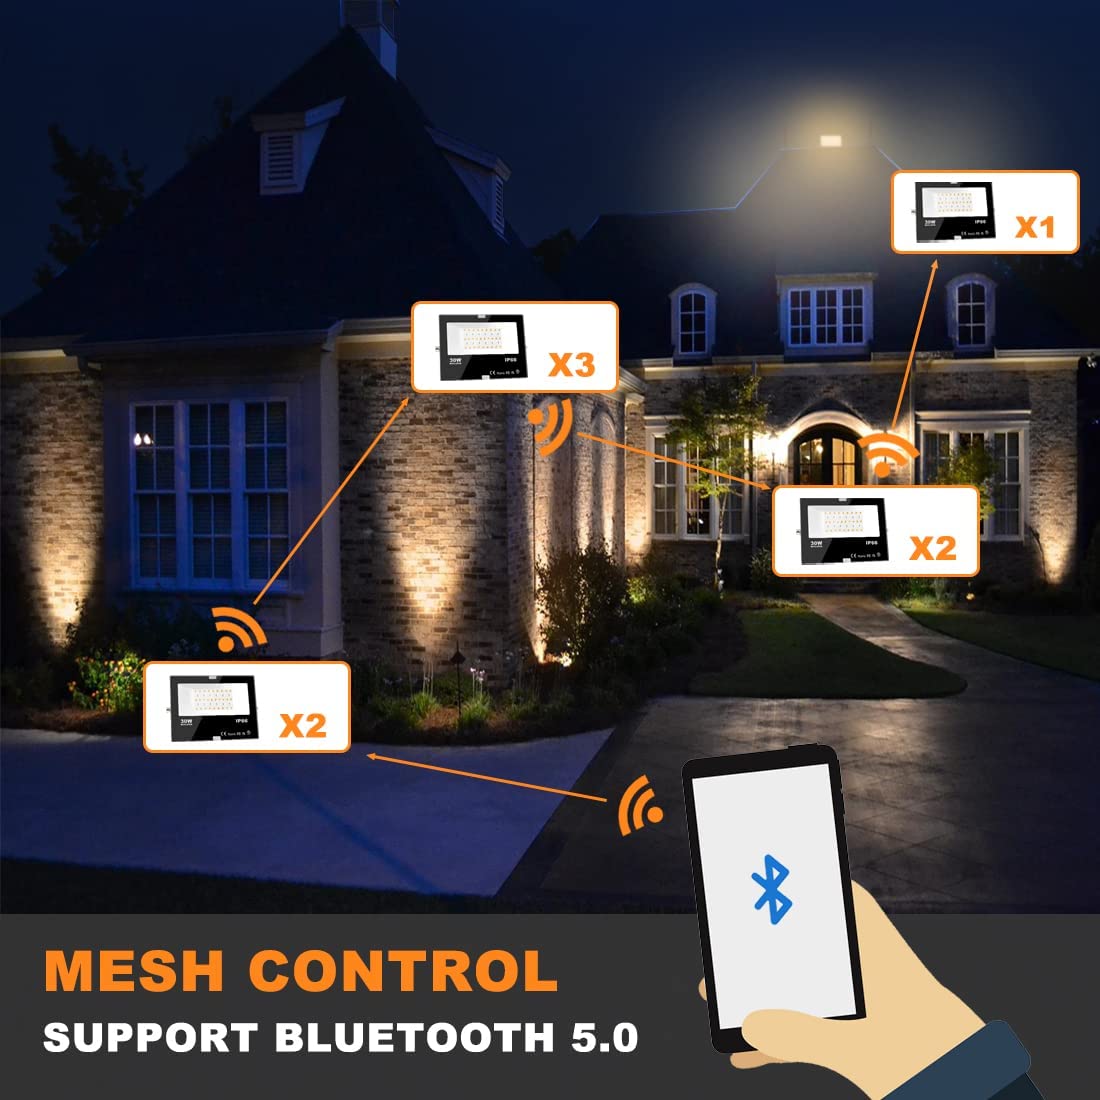 LED Flood Light, 300W Equivalent, Bluetooth APP Controlled RGB Color C